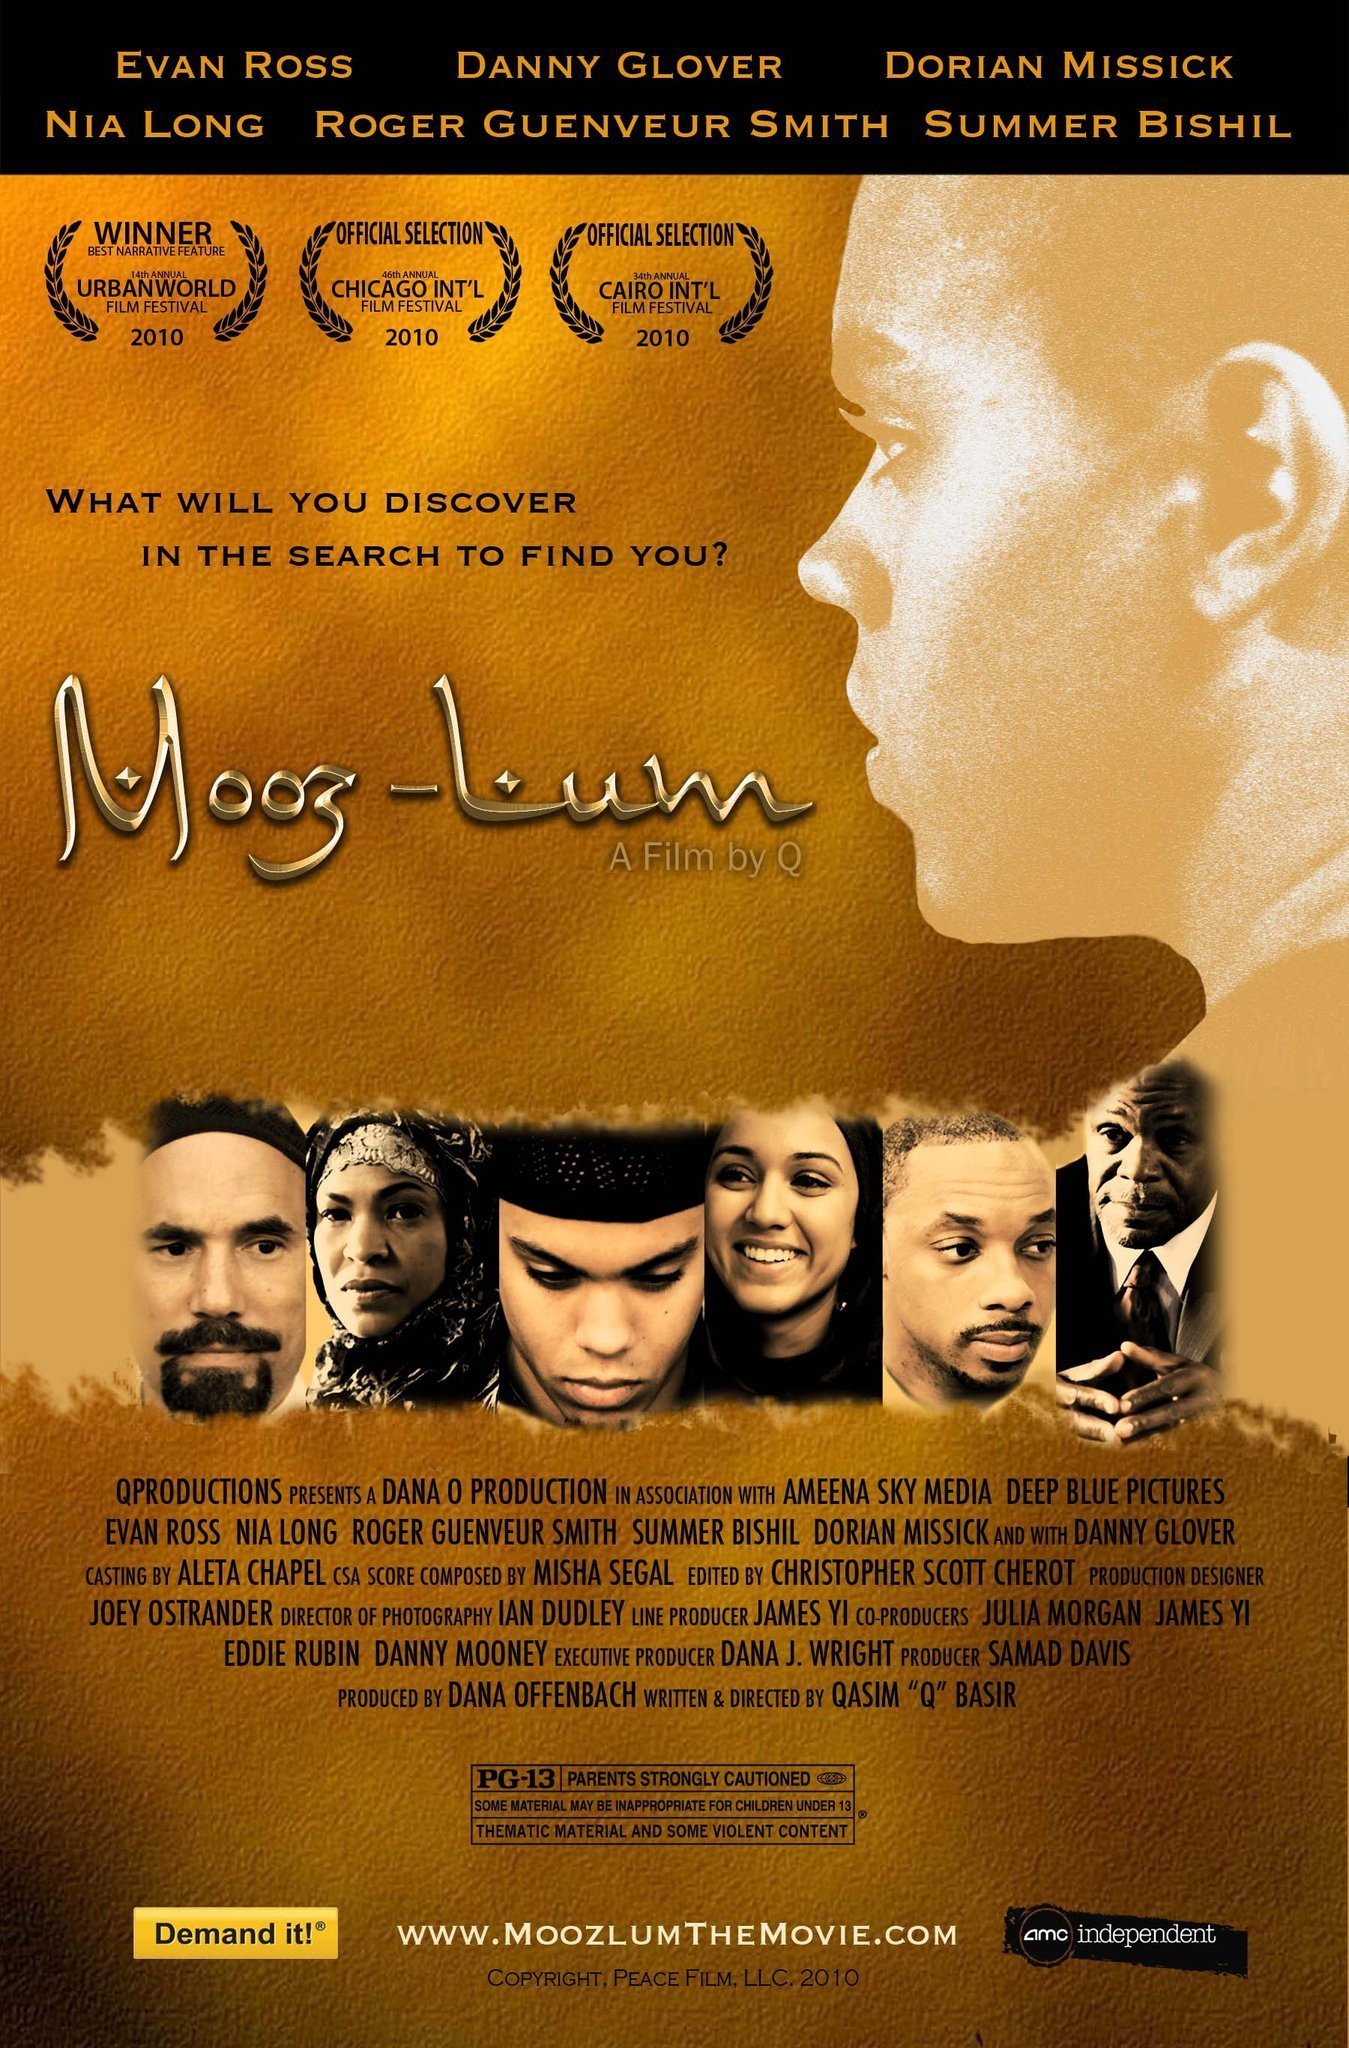 Poster of the movie Mooz-lum